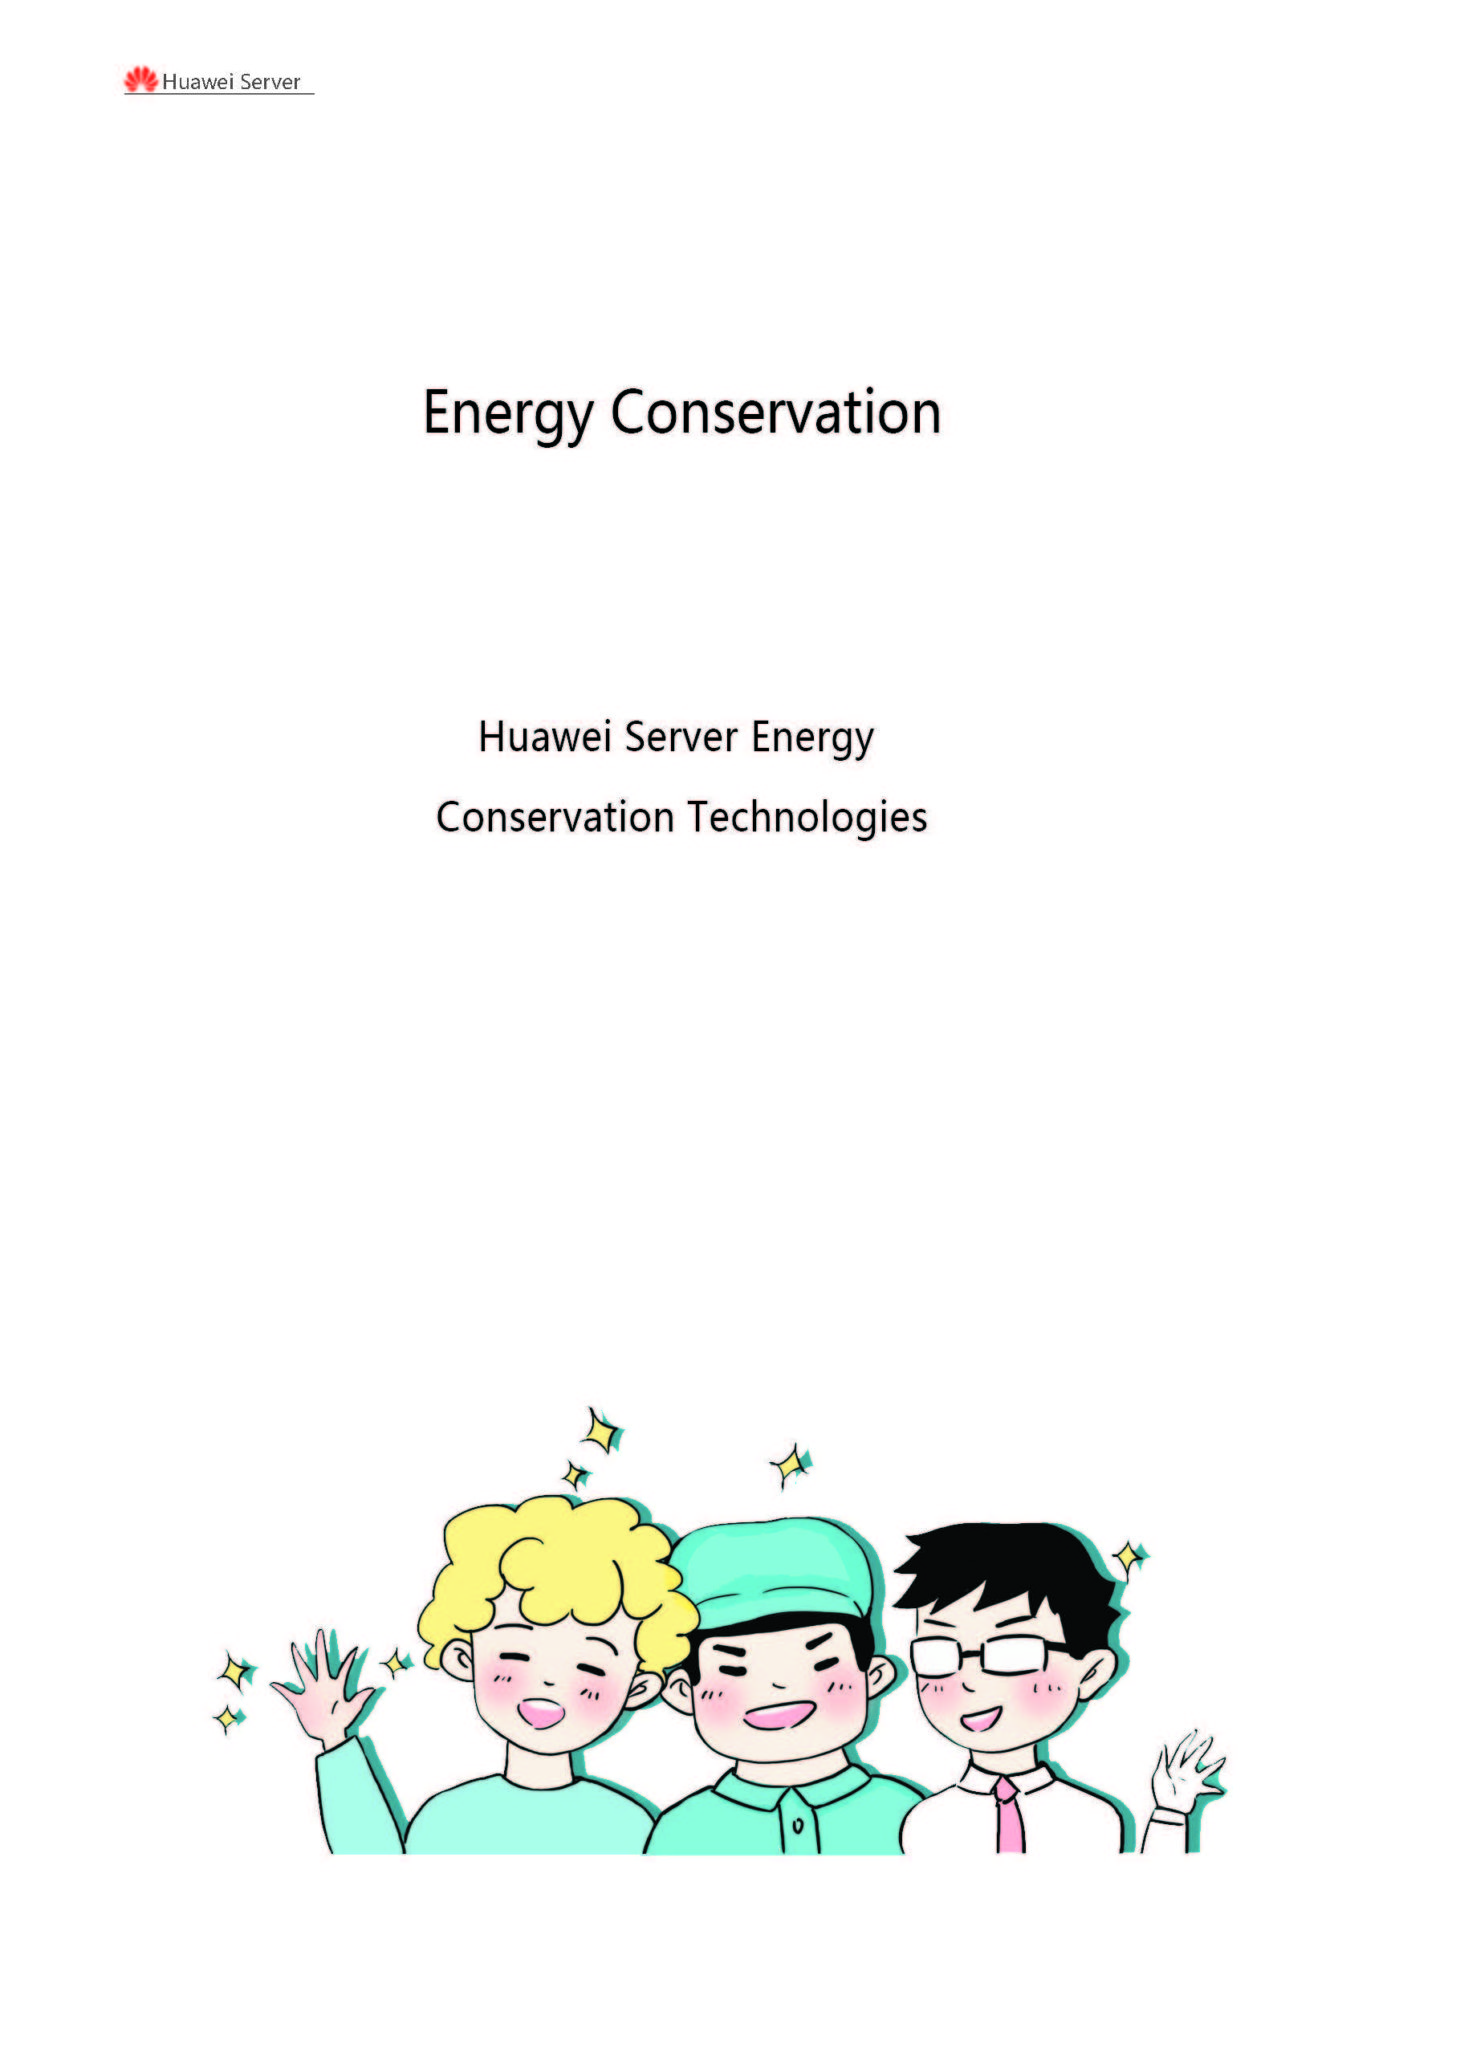 Huawei Server Innovation Genes – Energy Conservation